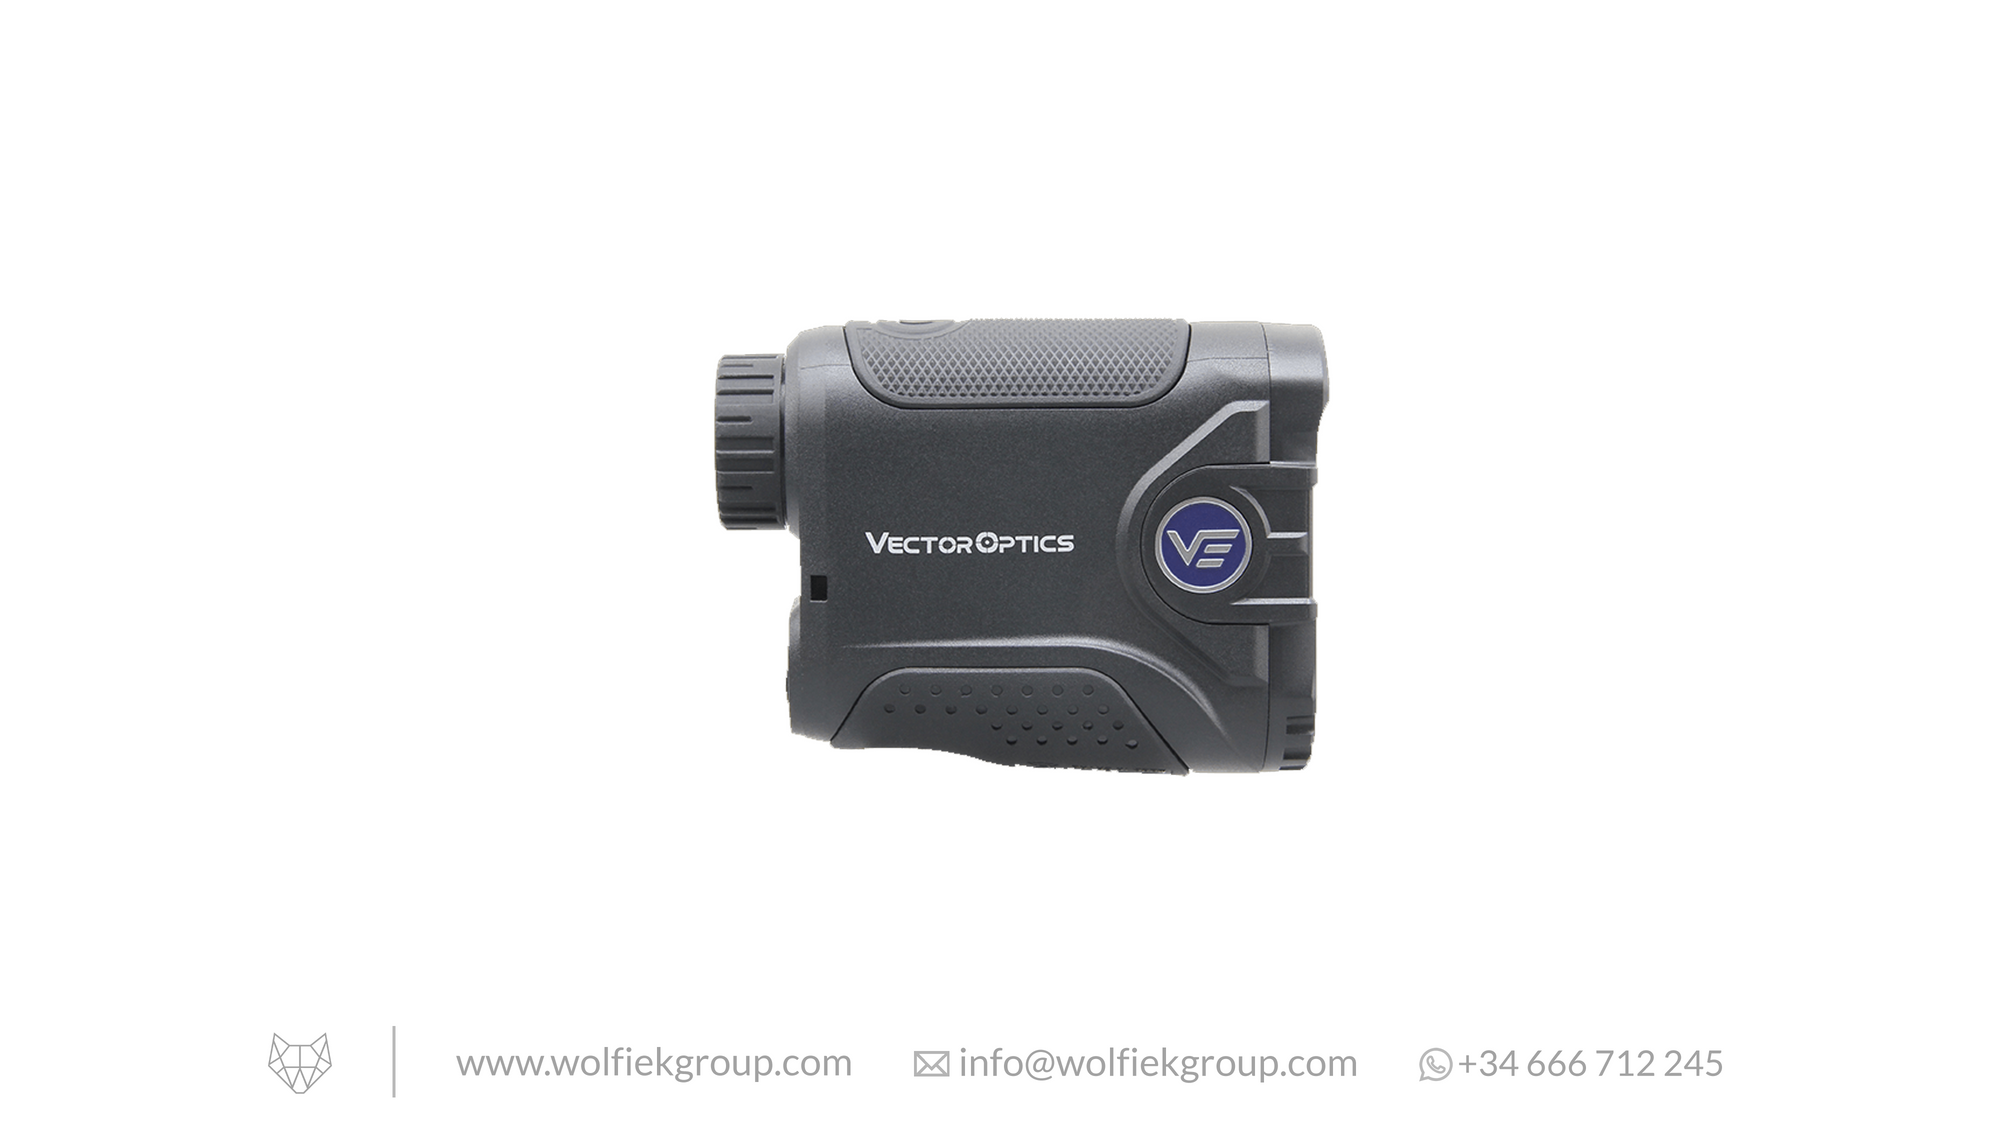 Vector optics Paragon 6x21 digital ballistic laser rangefinder